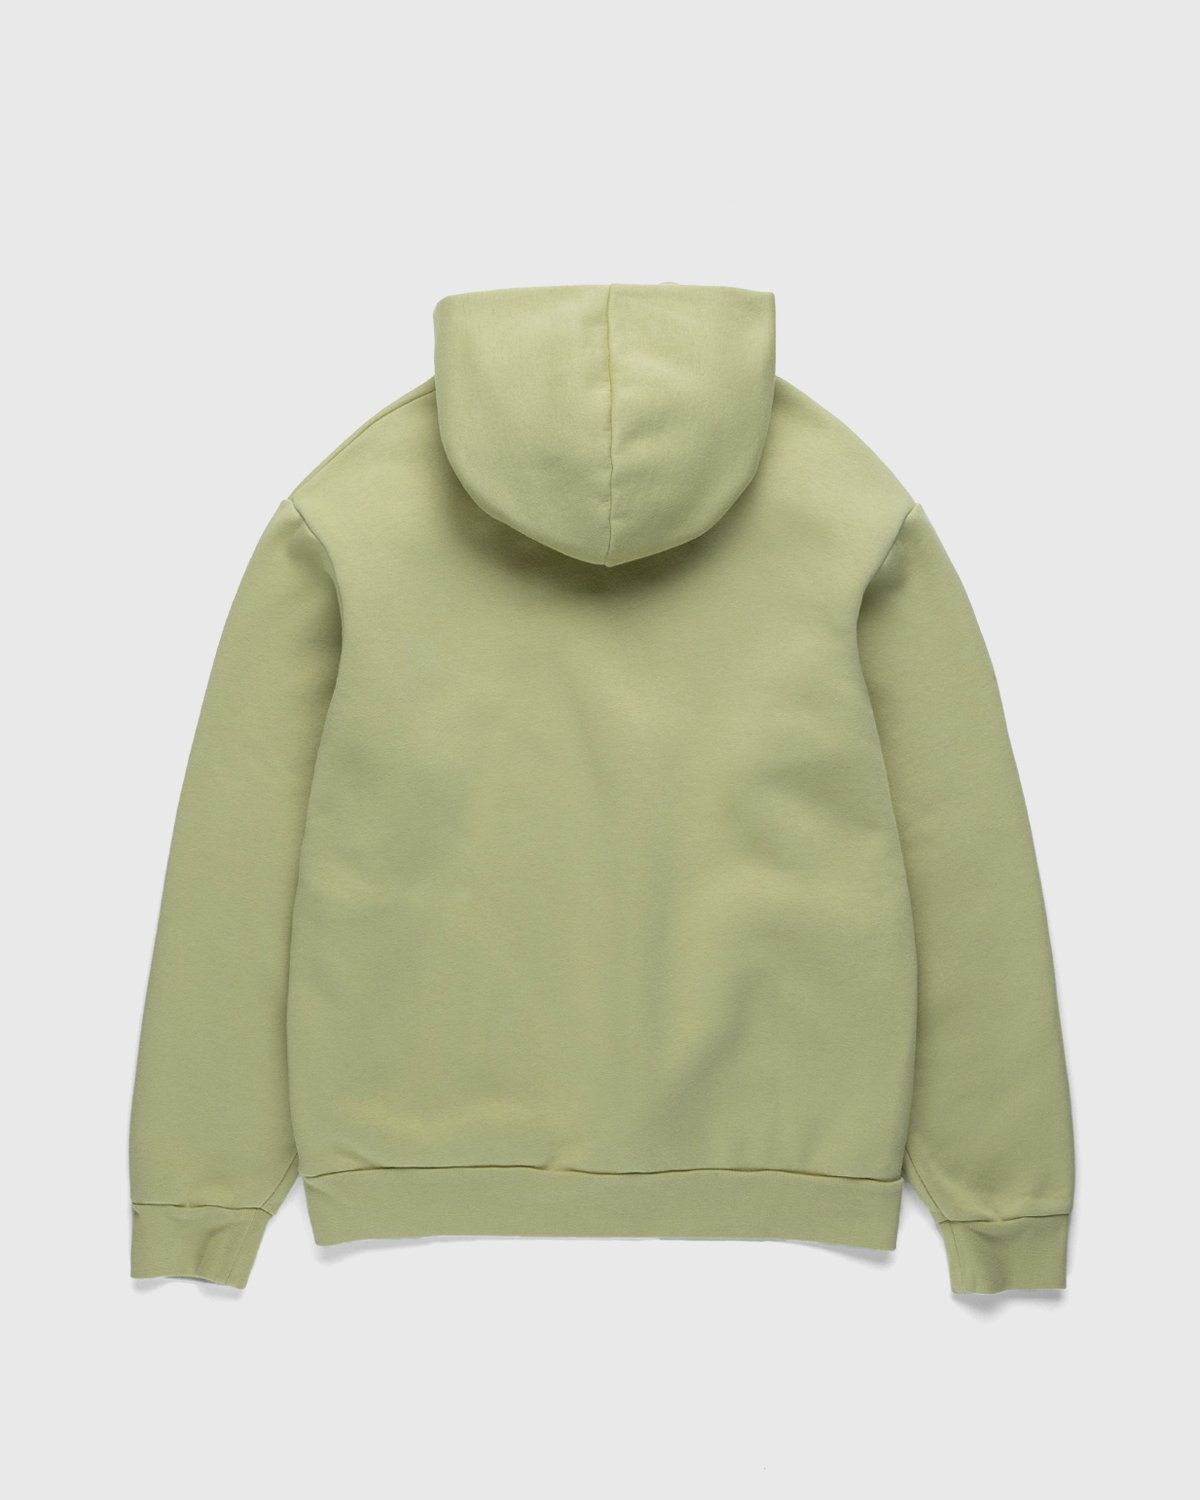 Acne Studios – Midweight Fleece Hooded Sweatshirt Pale Green - Image 2